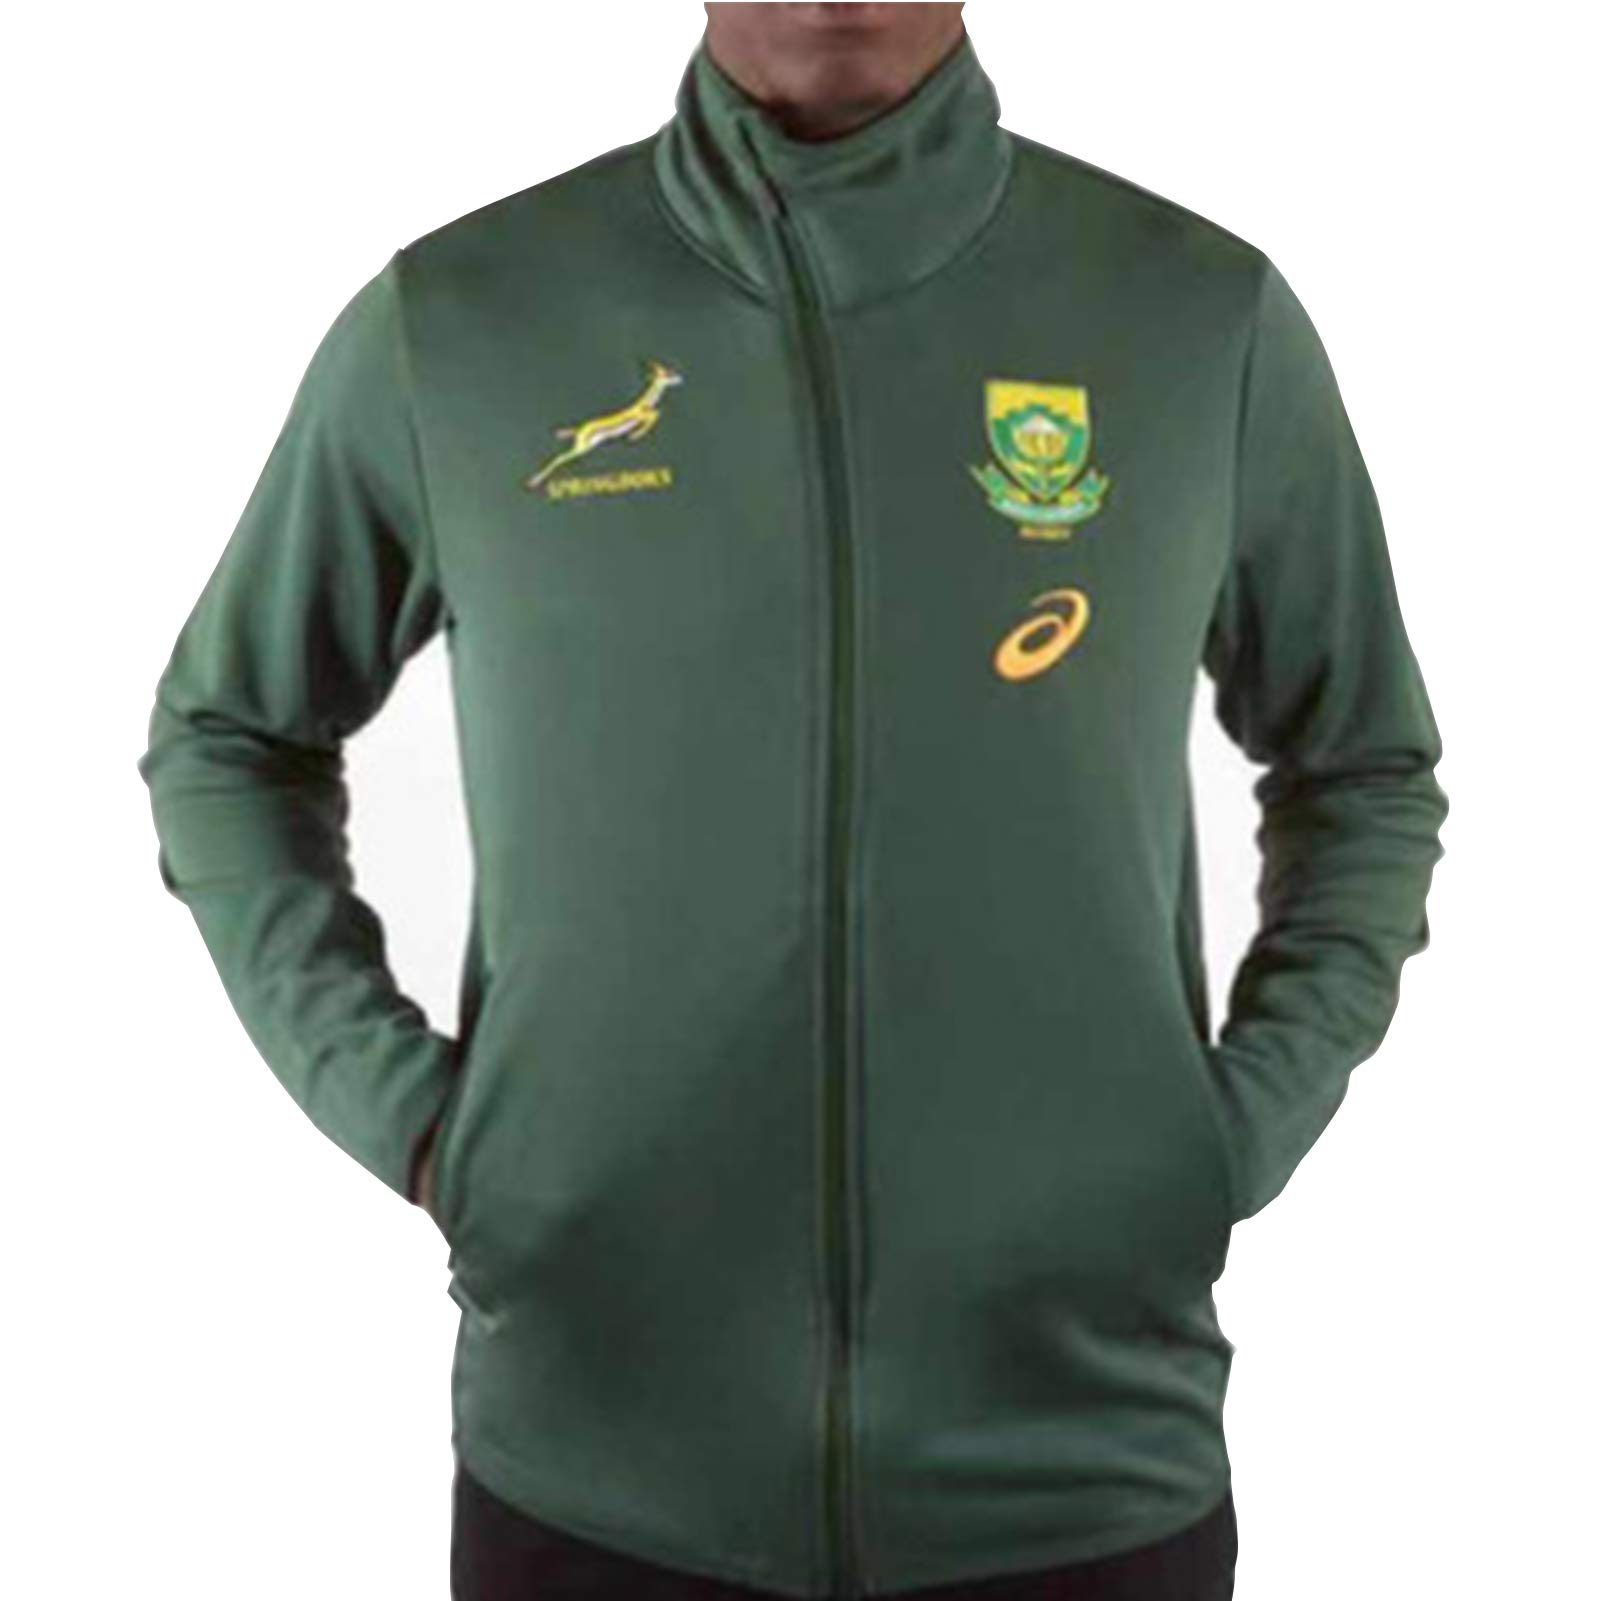 YINTE 2018 Südafrika Springboks Rugby Jersey, Weltcup-Jacke Football Training Anzug Trainingsanzüge, Herbst Und Winter Langarm Sweater Anzug Green-M